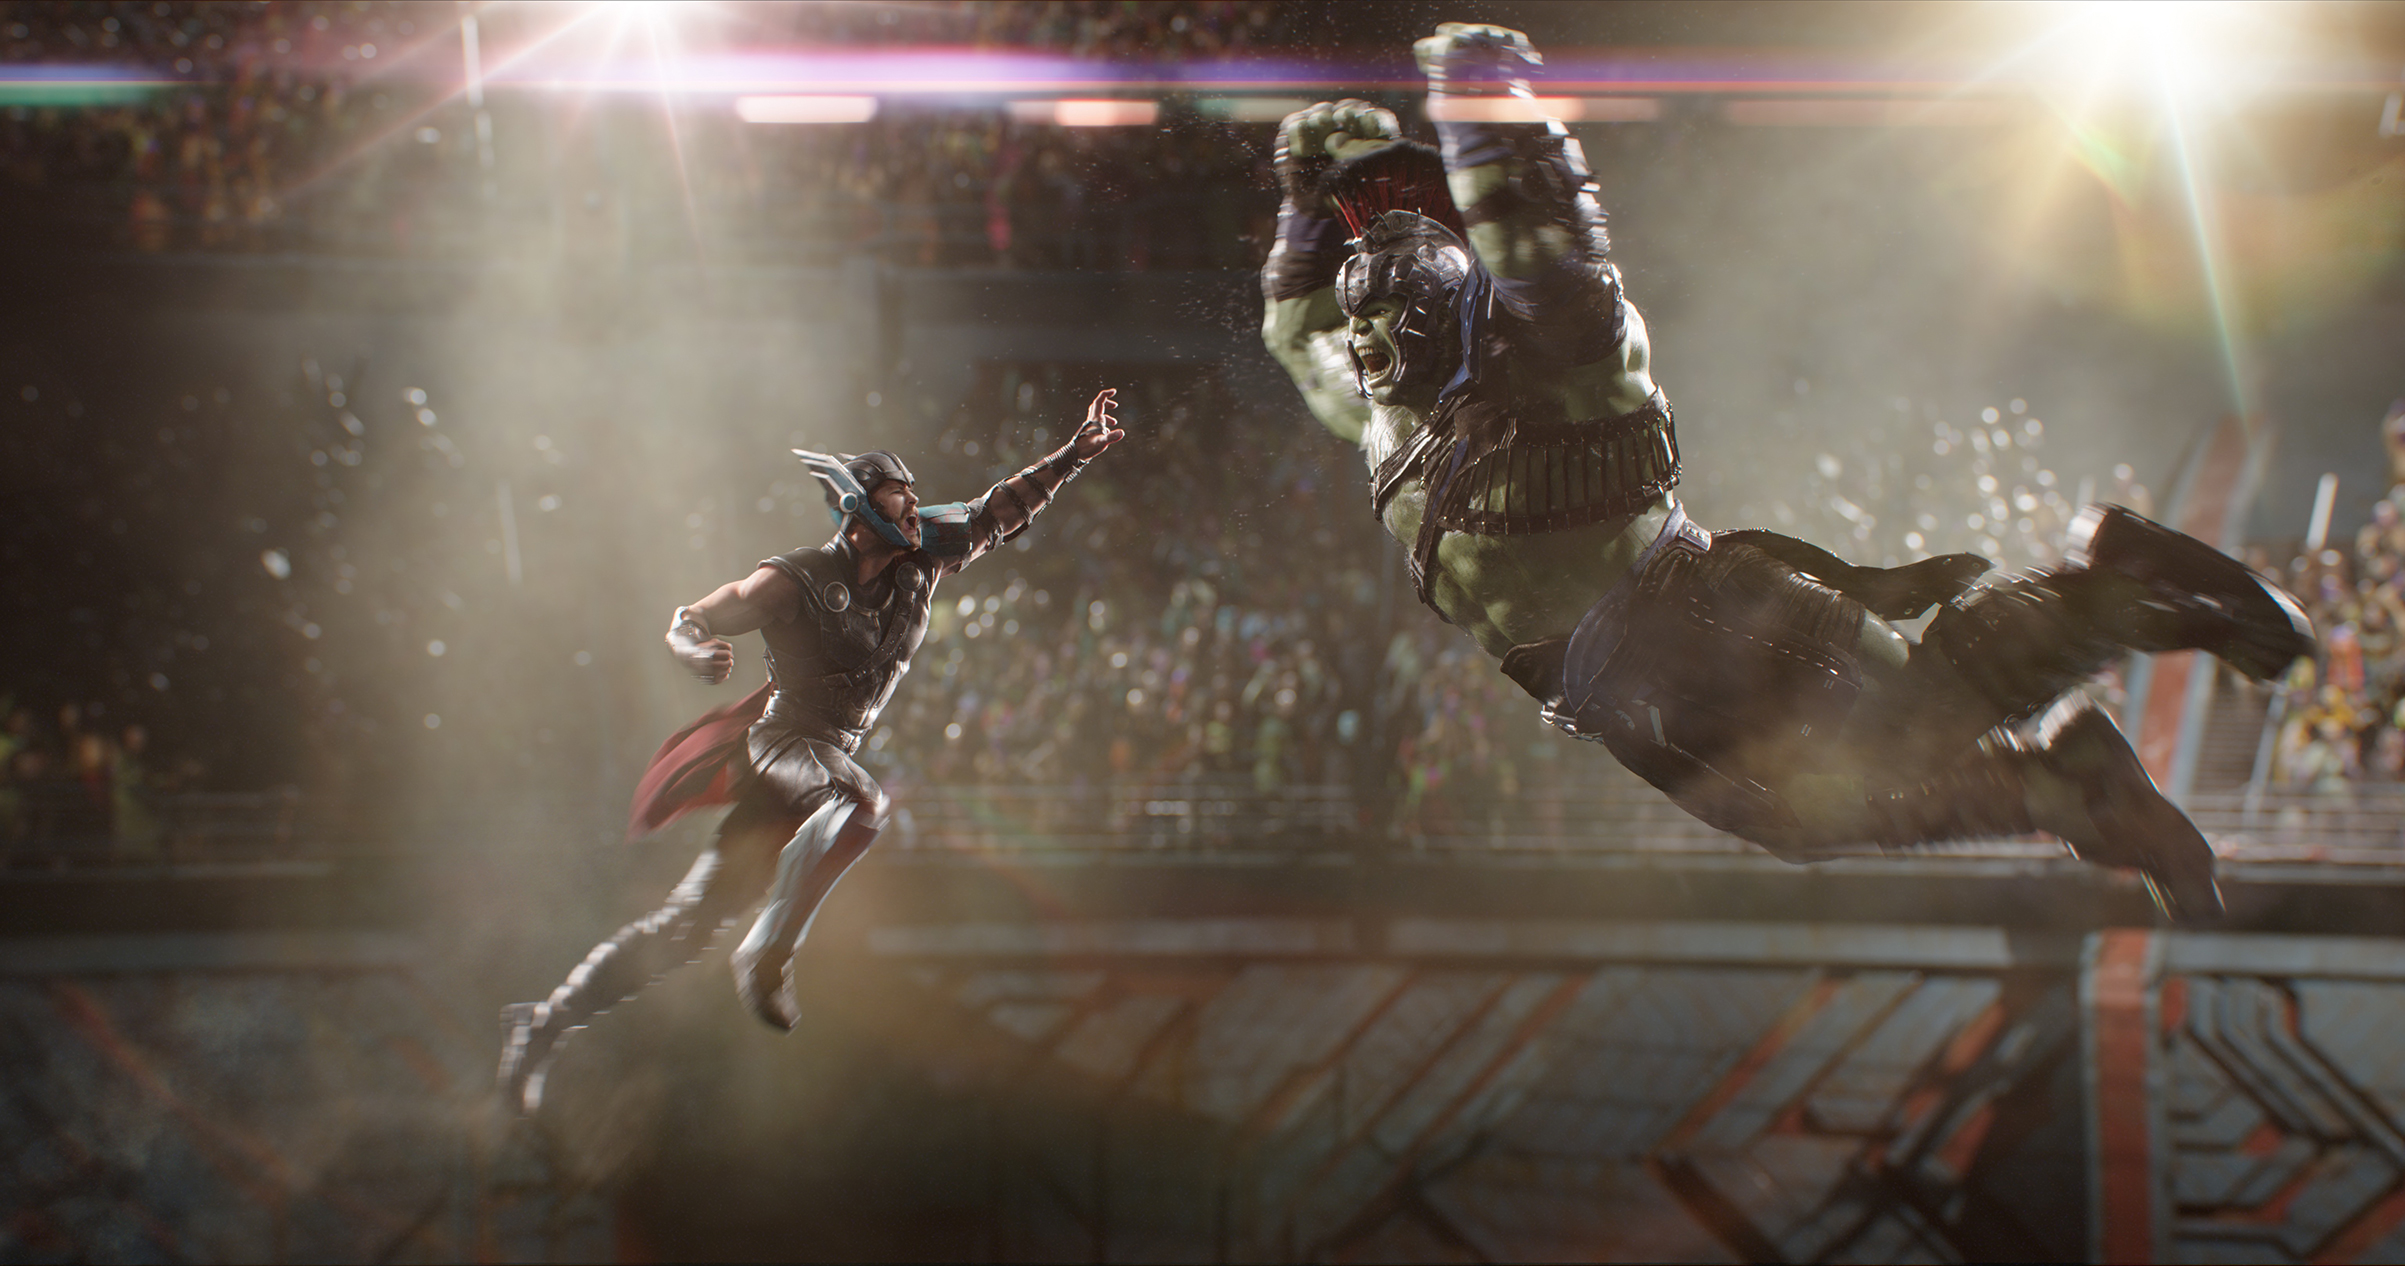 Thor (Hemsworth)and the Hulk (Ruffalo)finally answer the question (Marvel Studios)